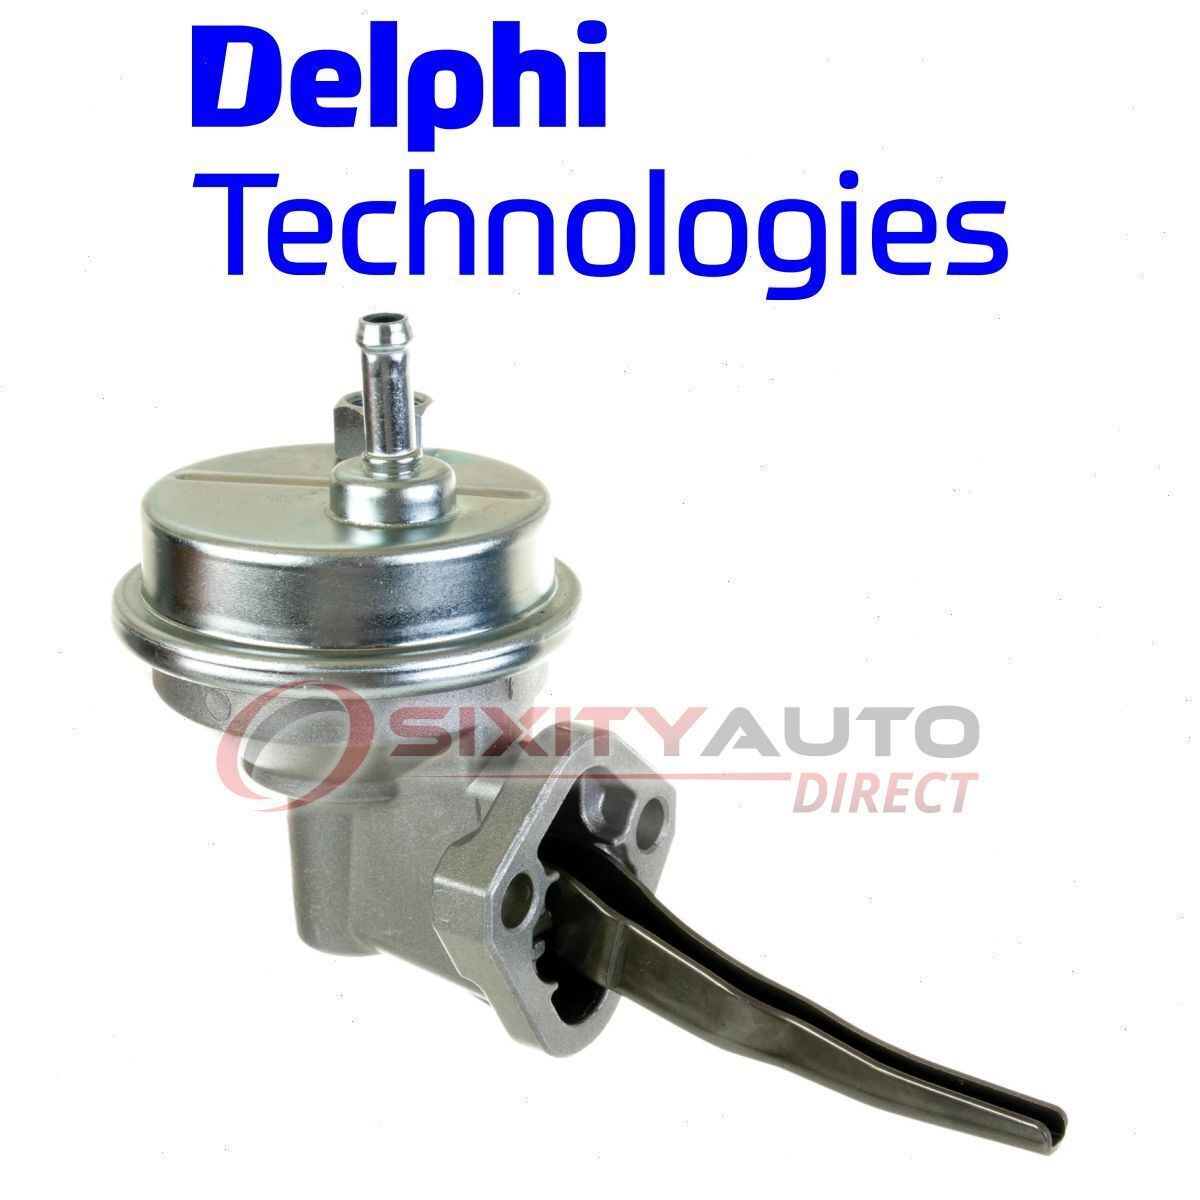 Delphi Mechanical Fuel Pump for 1978-1980 Oldsmobile Cutlass Salon 3.8L V6 wu